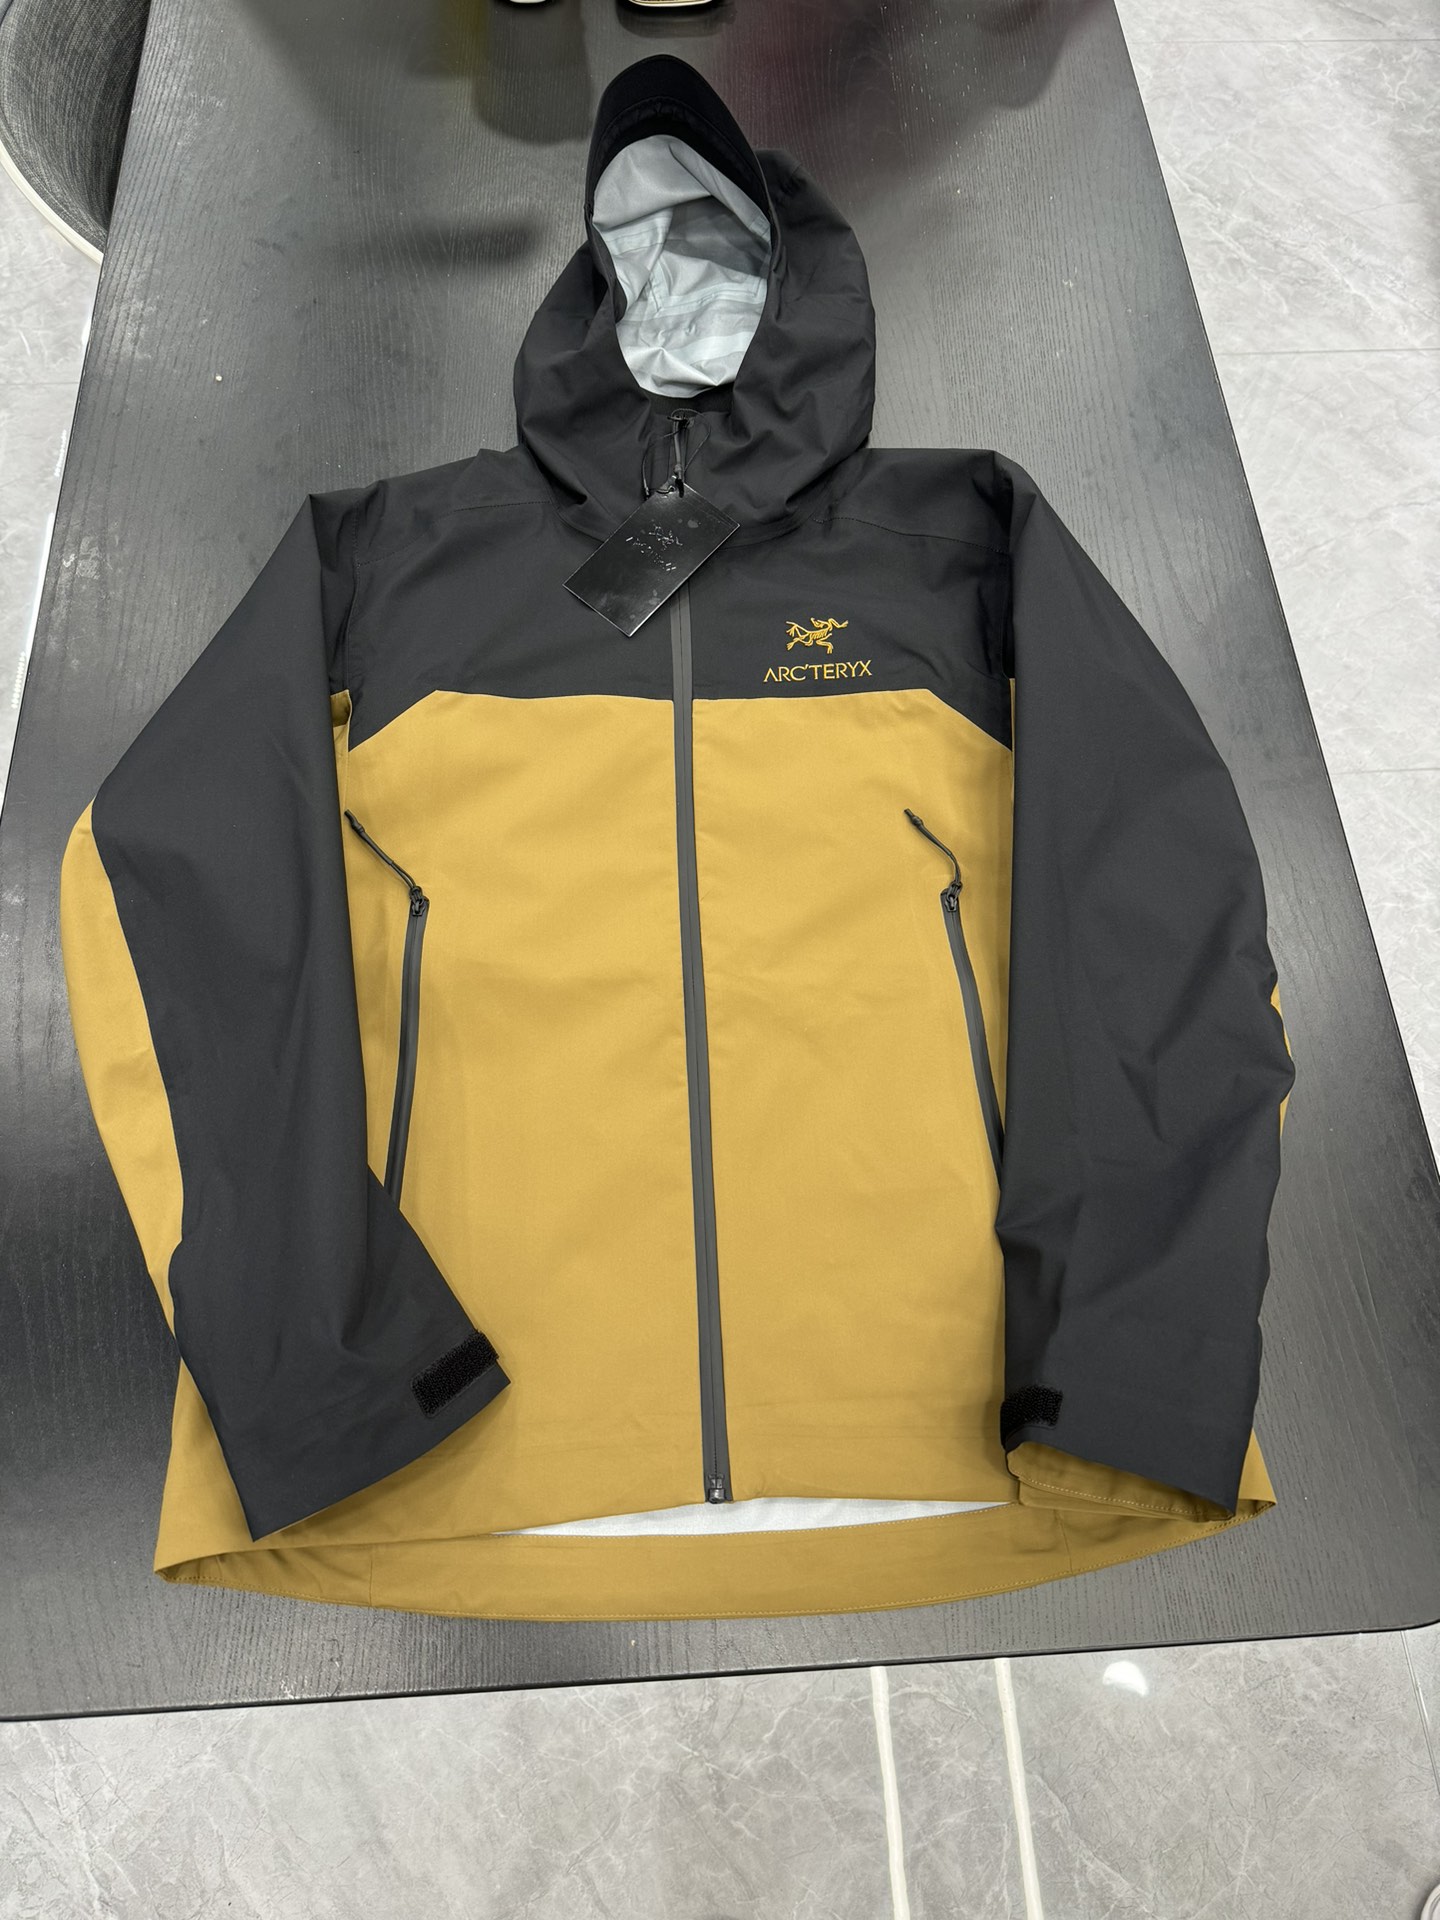 ️鸟家冲锋衣Gore-tex功能性外套防水夹克.此款不只是因为它造型帅更是它完美户外功能性所有性能都是专